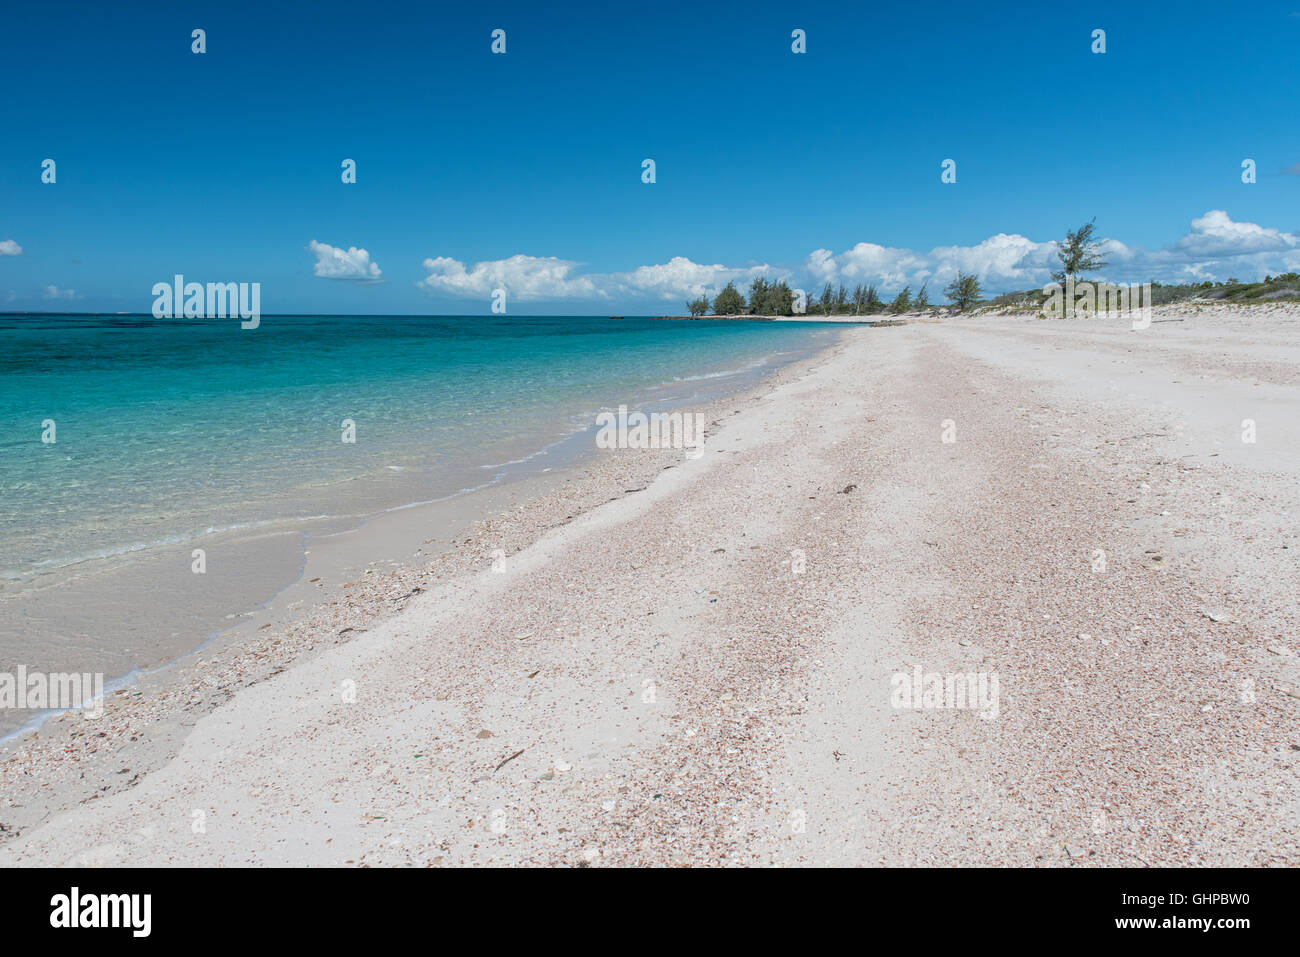 A deserted coral beach on Santa Carolina Island off Mozambique Stock Photo